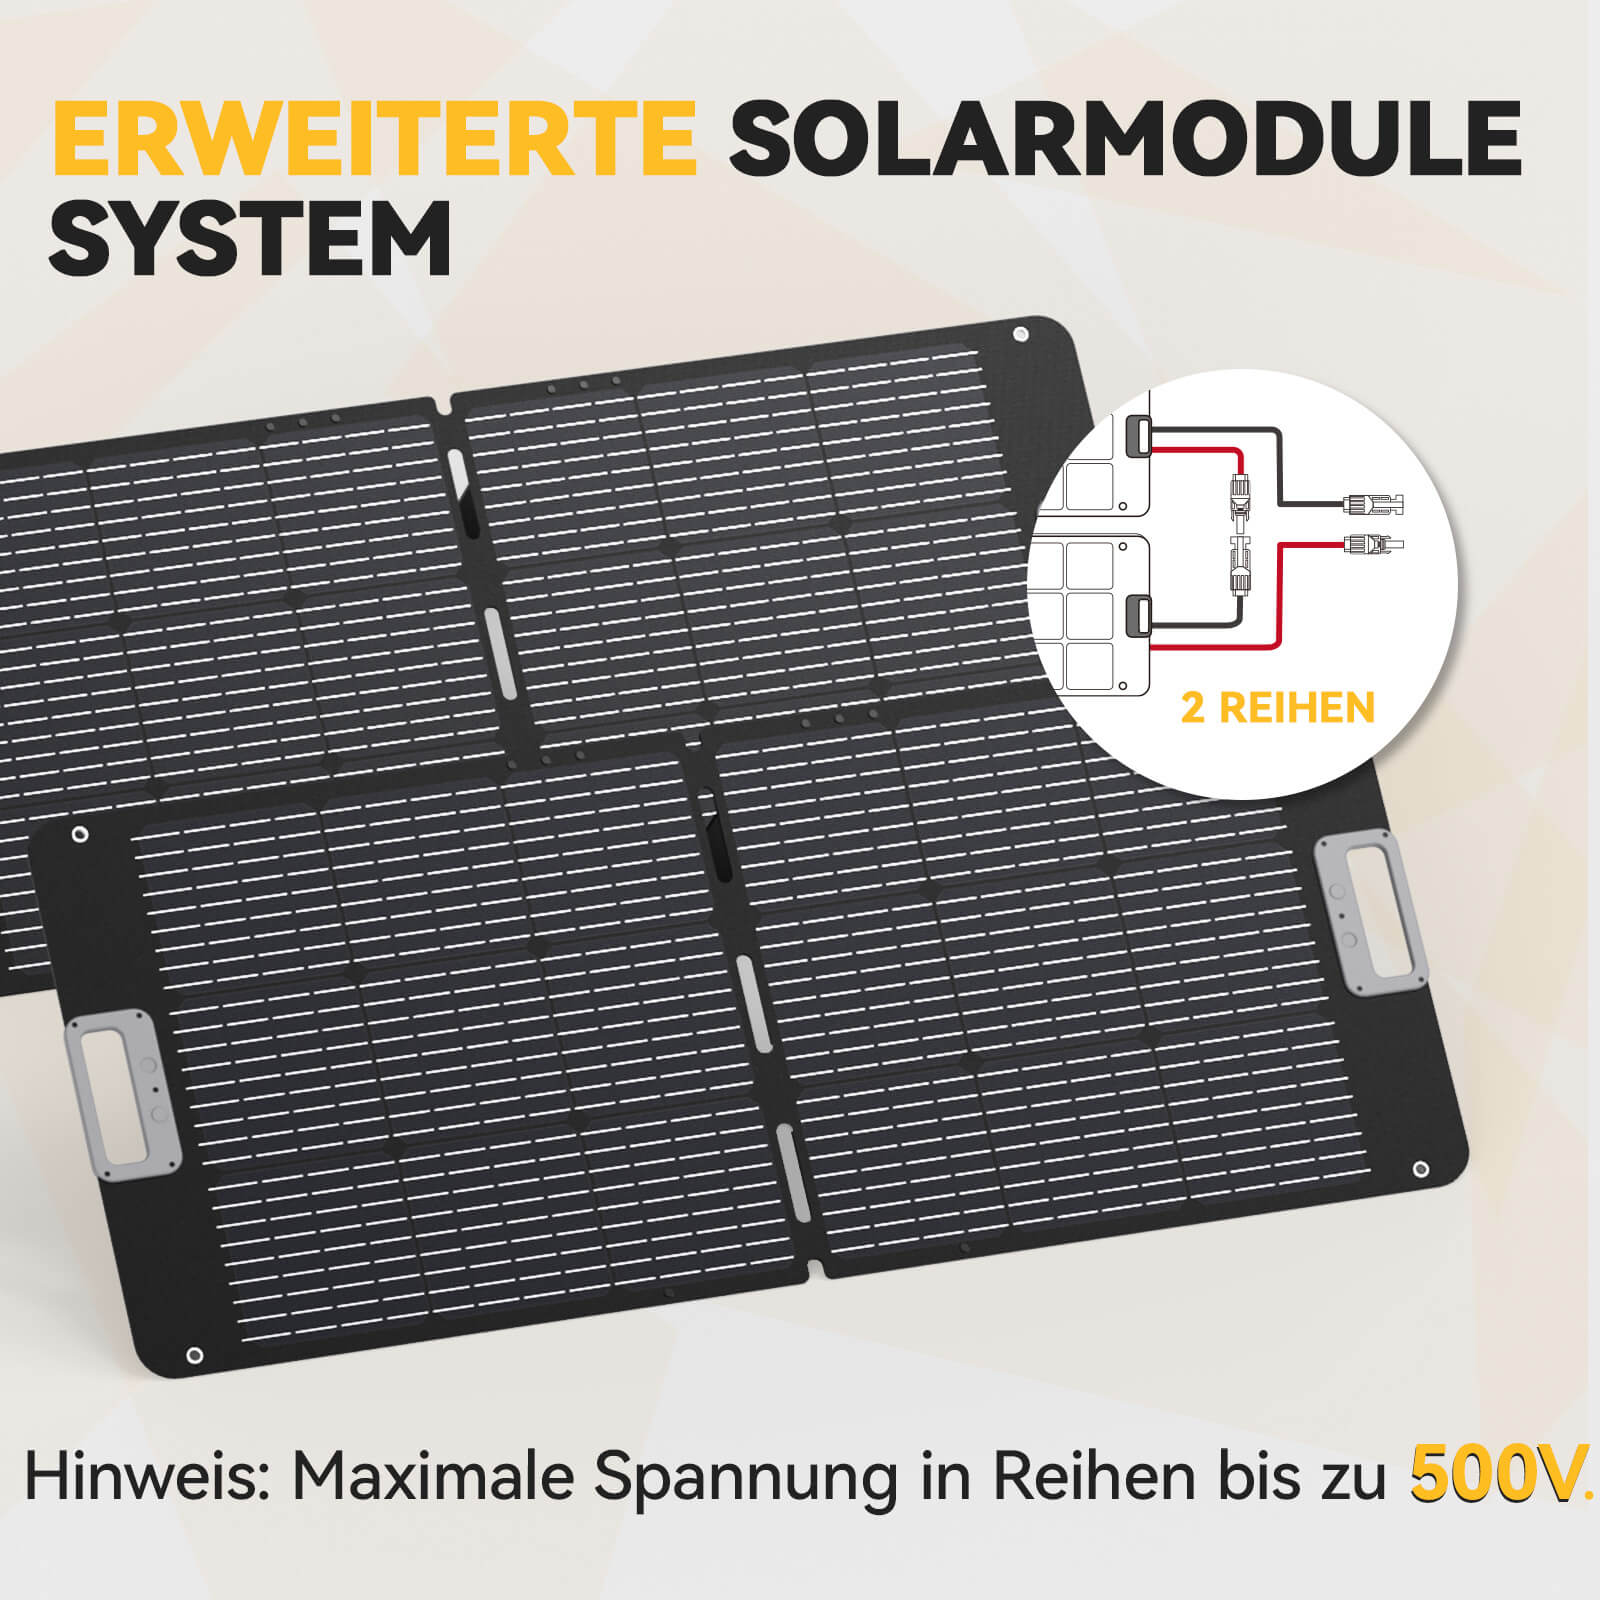 Panel solar portátil Power Queen de 100W para central eléctrica portátil P300